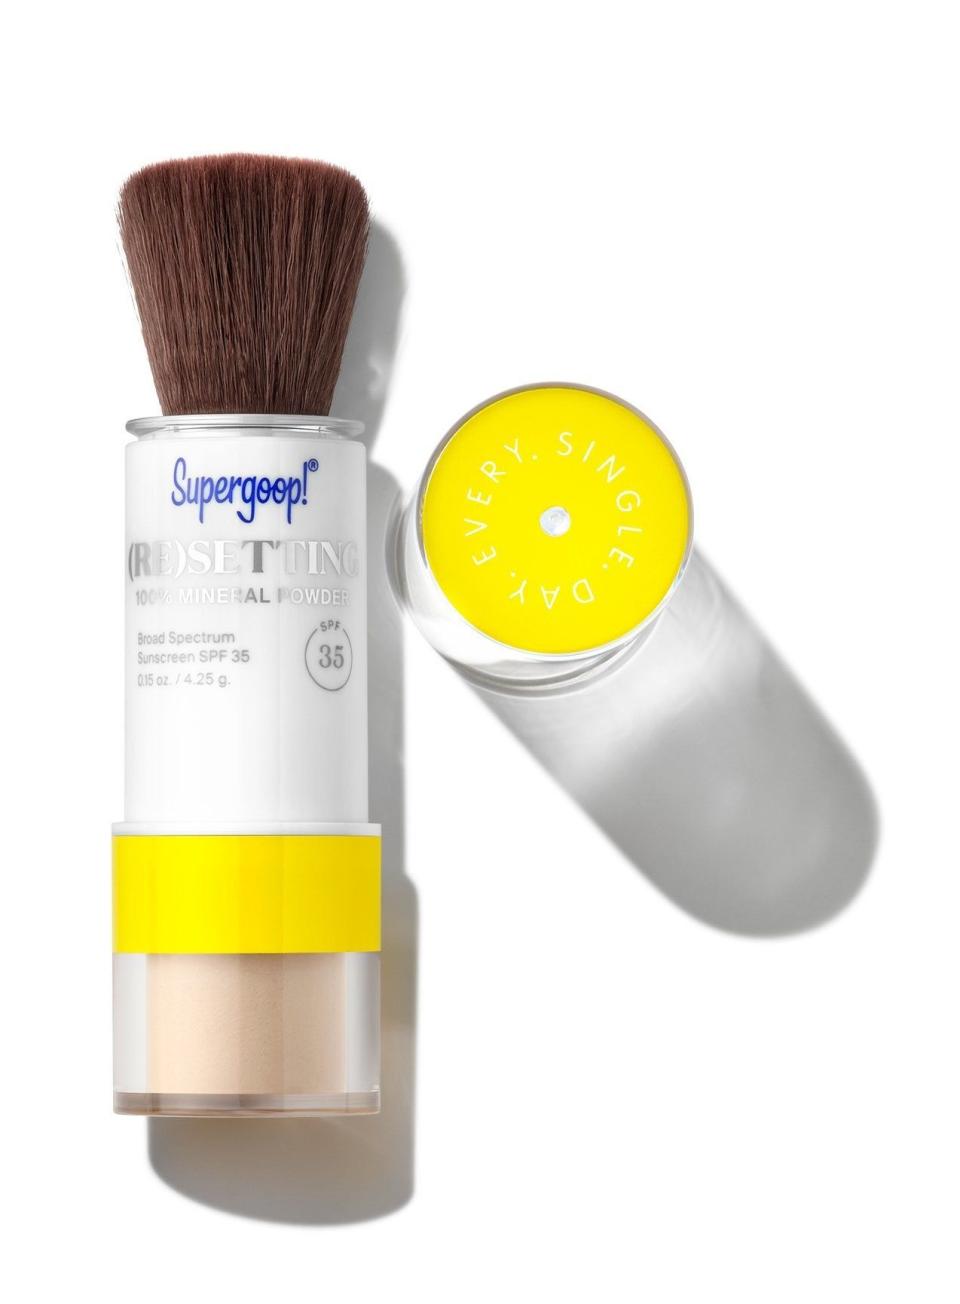 10) (Re)setting 100% Mineral Powder Sunscreen SPF 35 PA+++